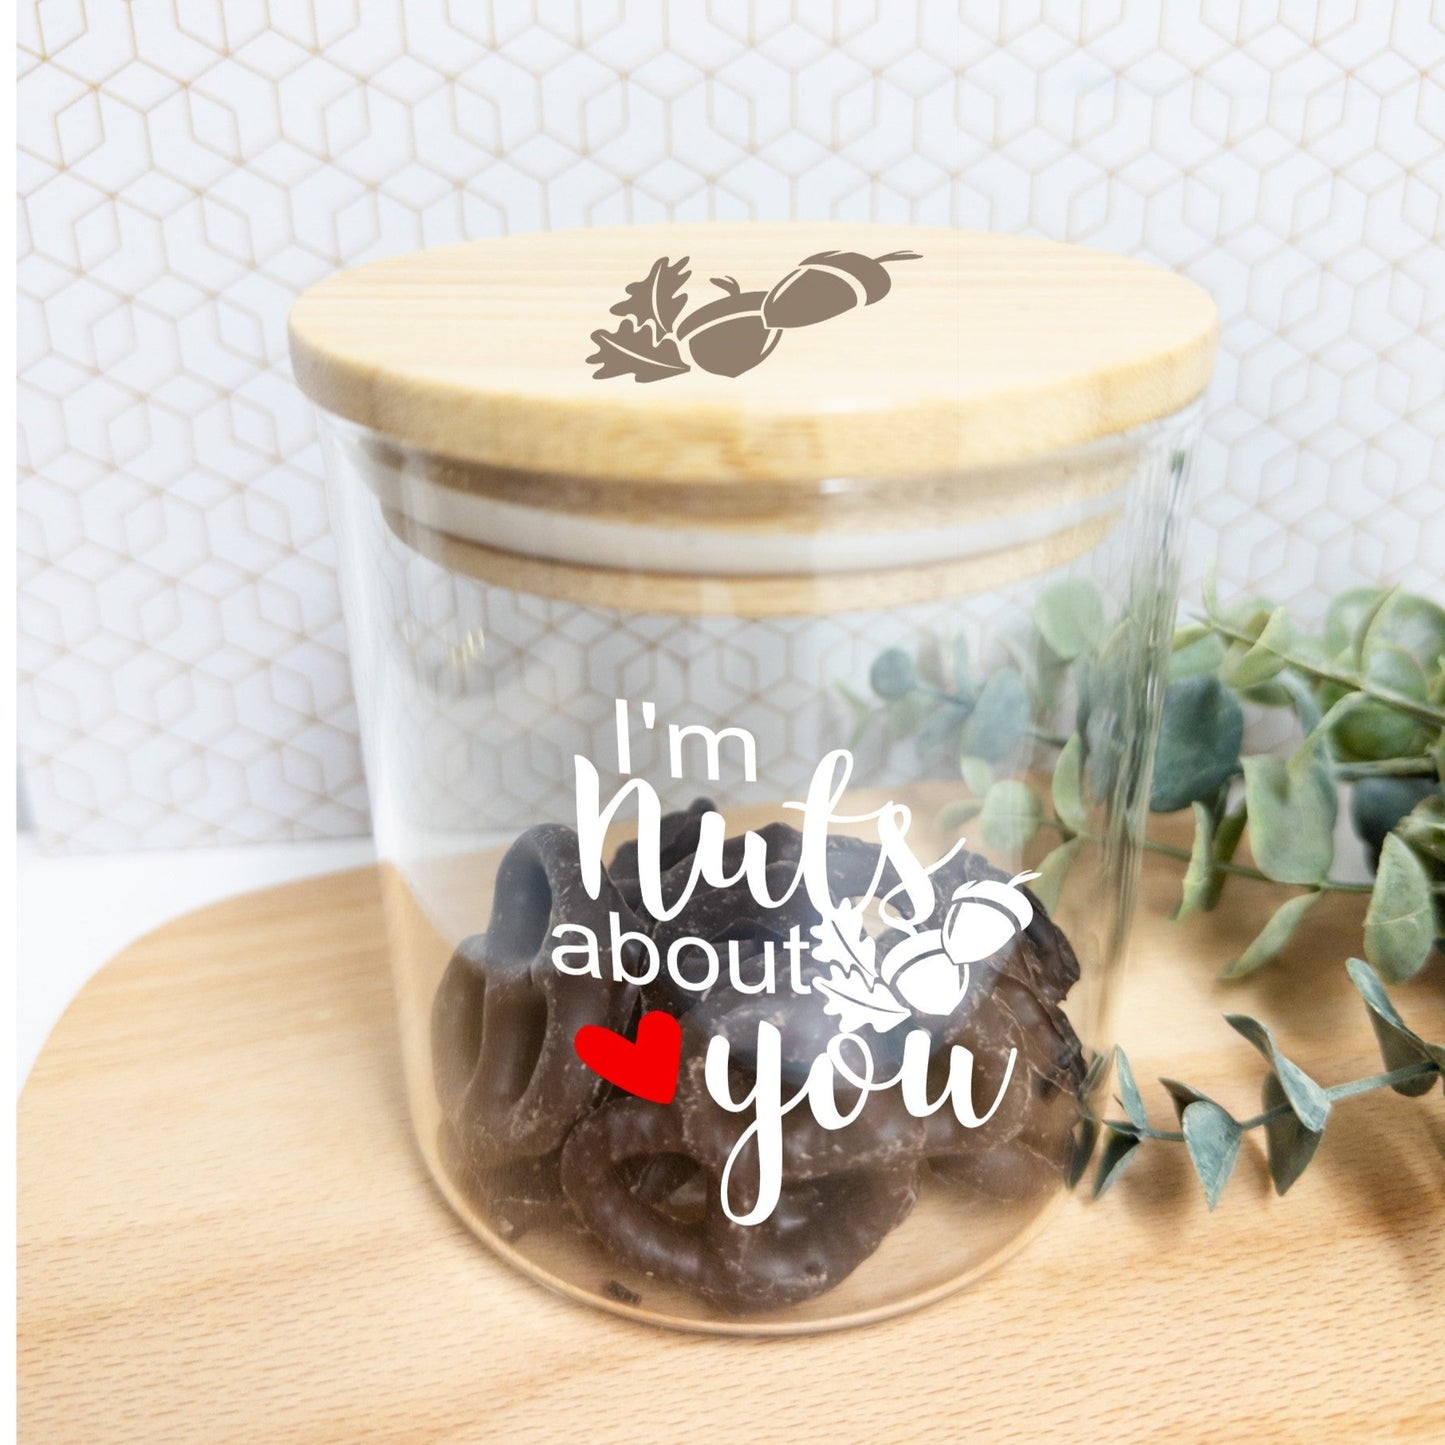 Personalized nuts jar